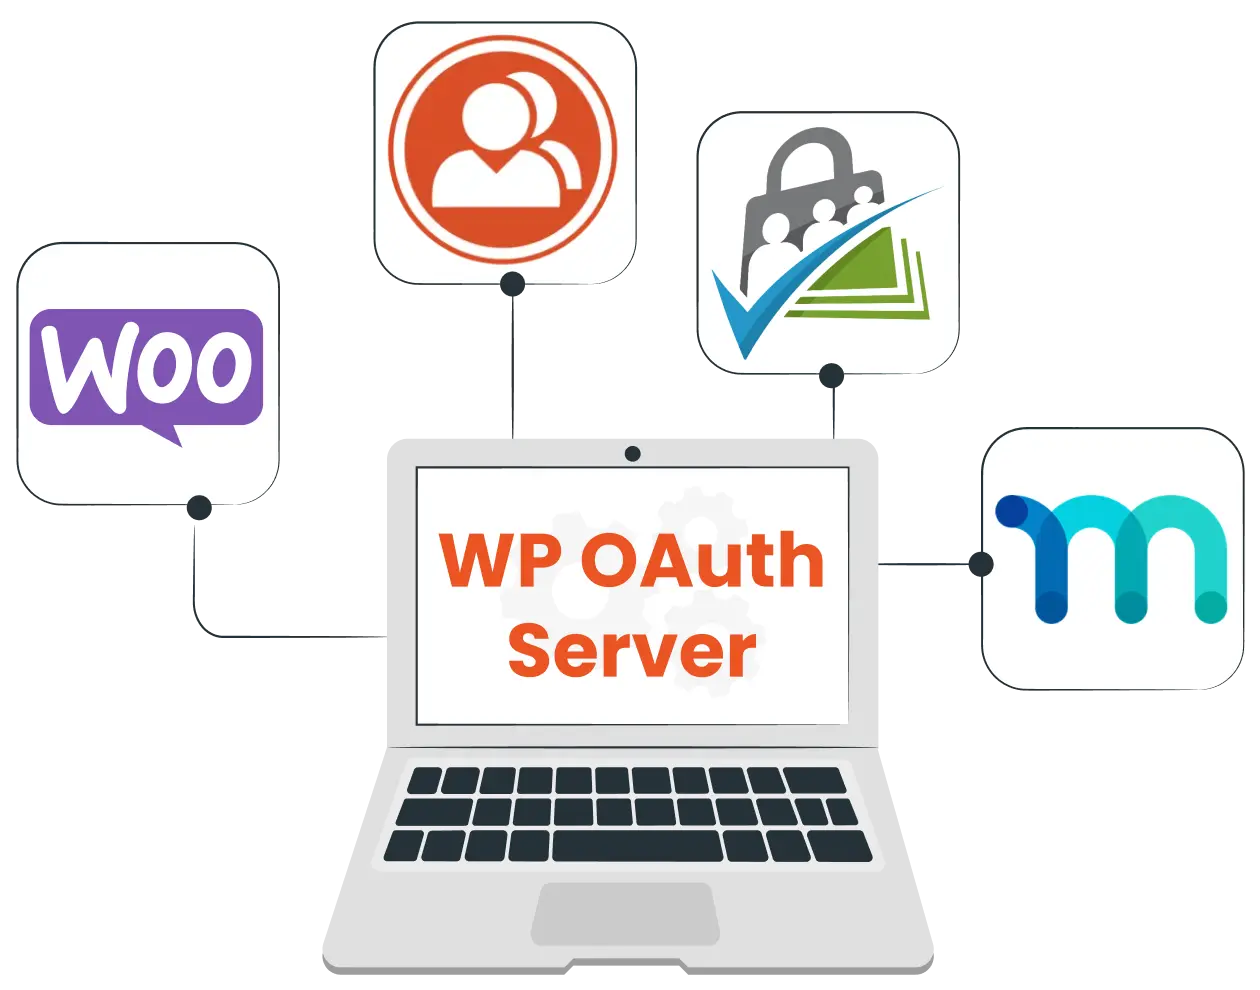 Integraciones de membresía - Servidor WP OAuth